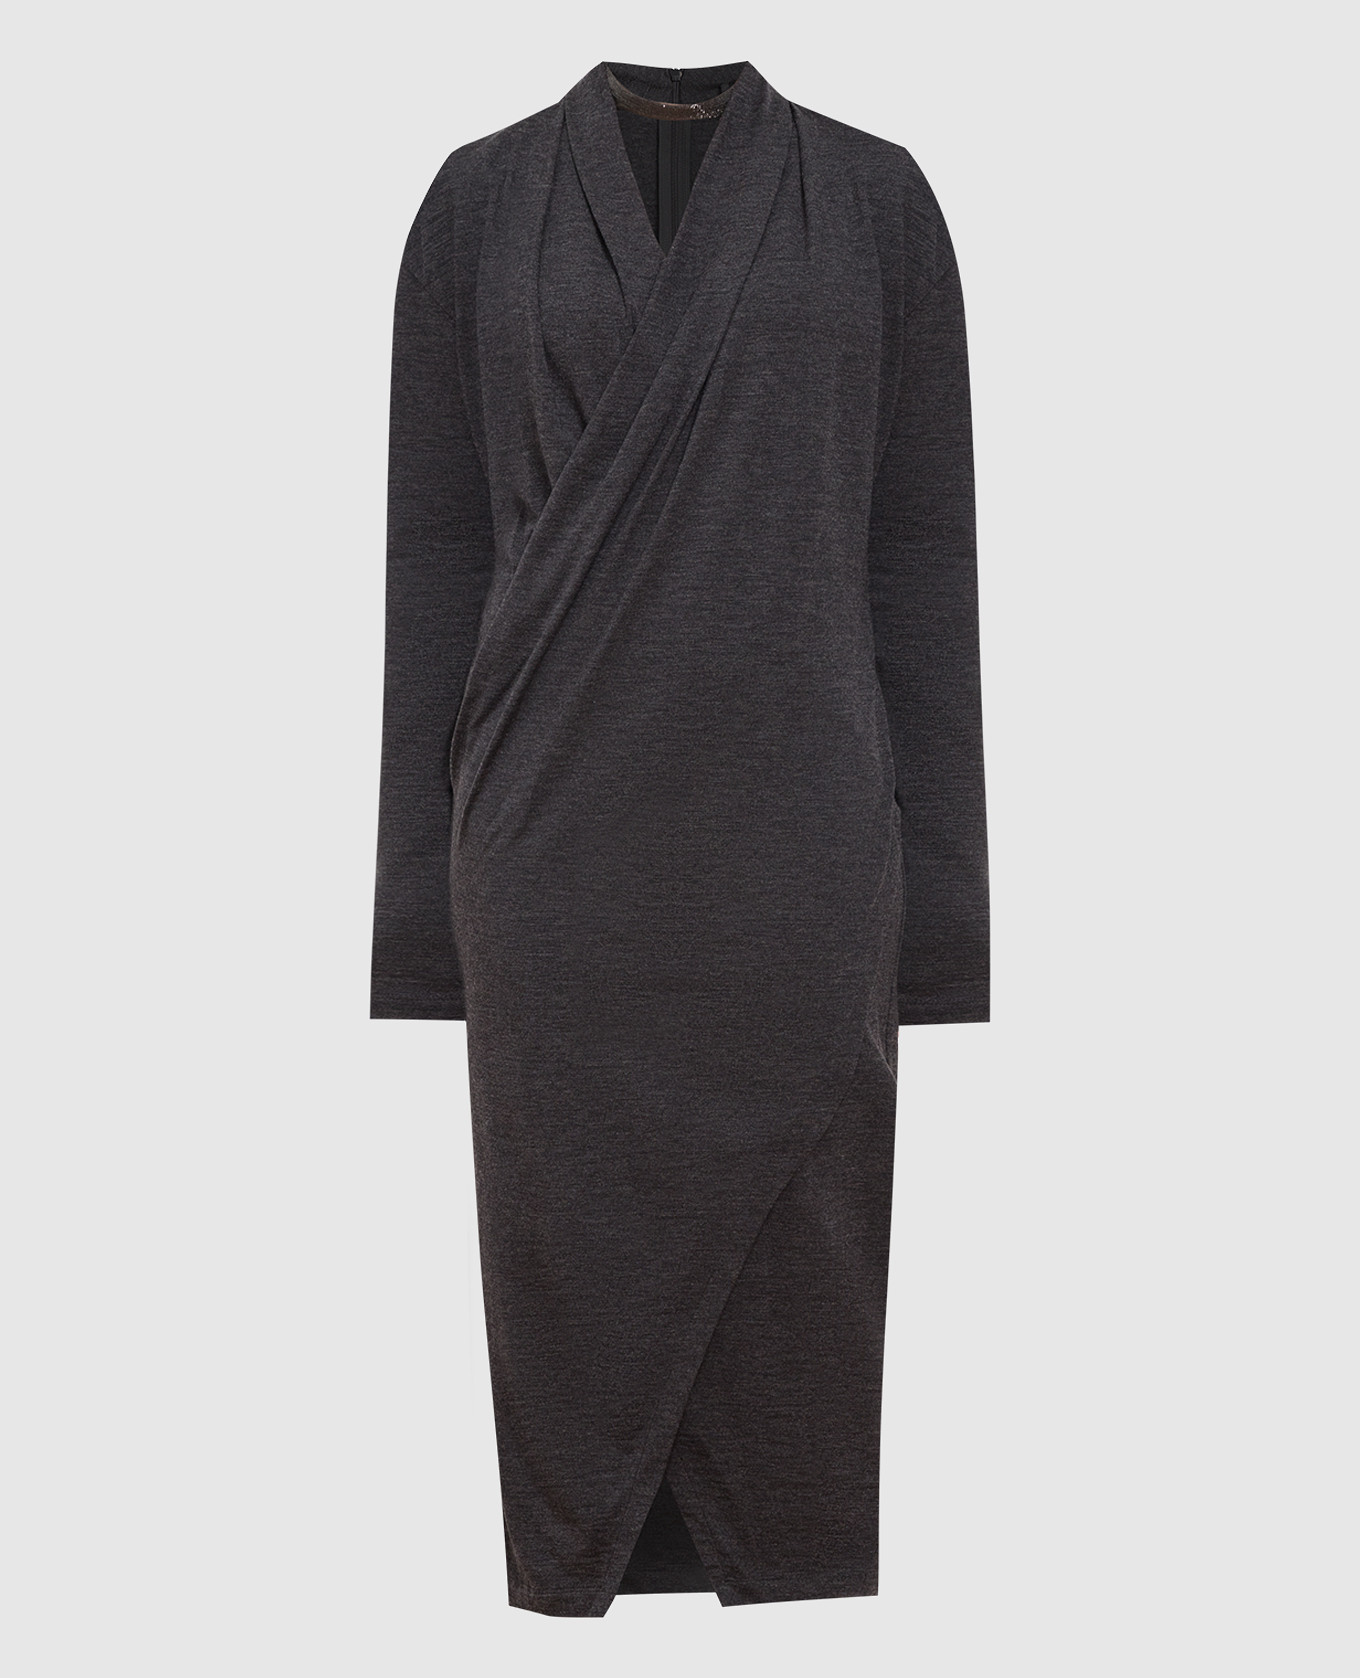 Graphite wool midi dress with choker